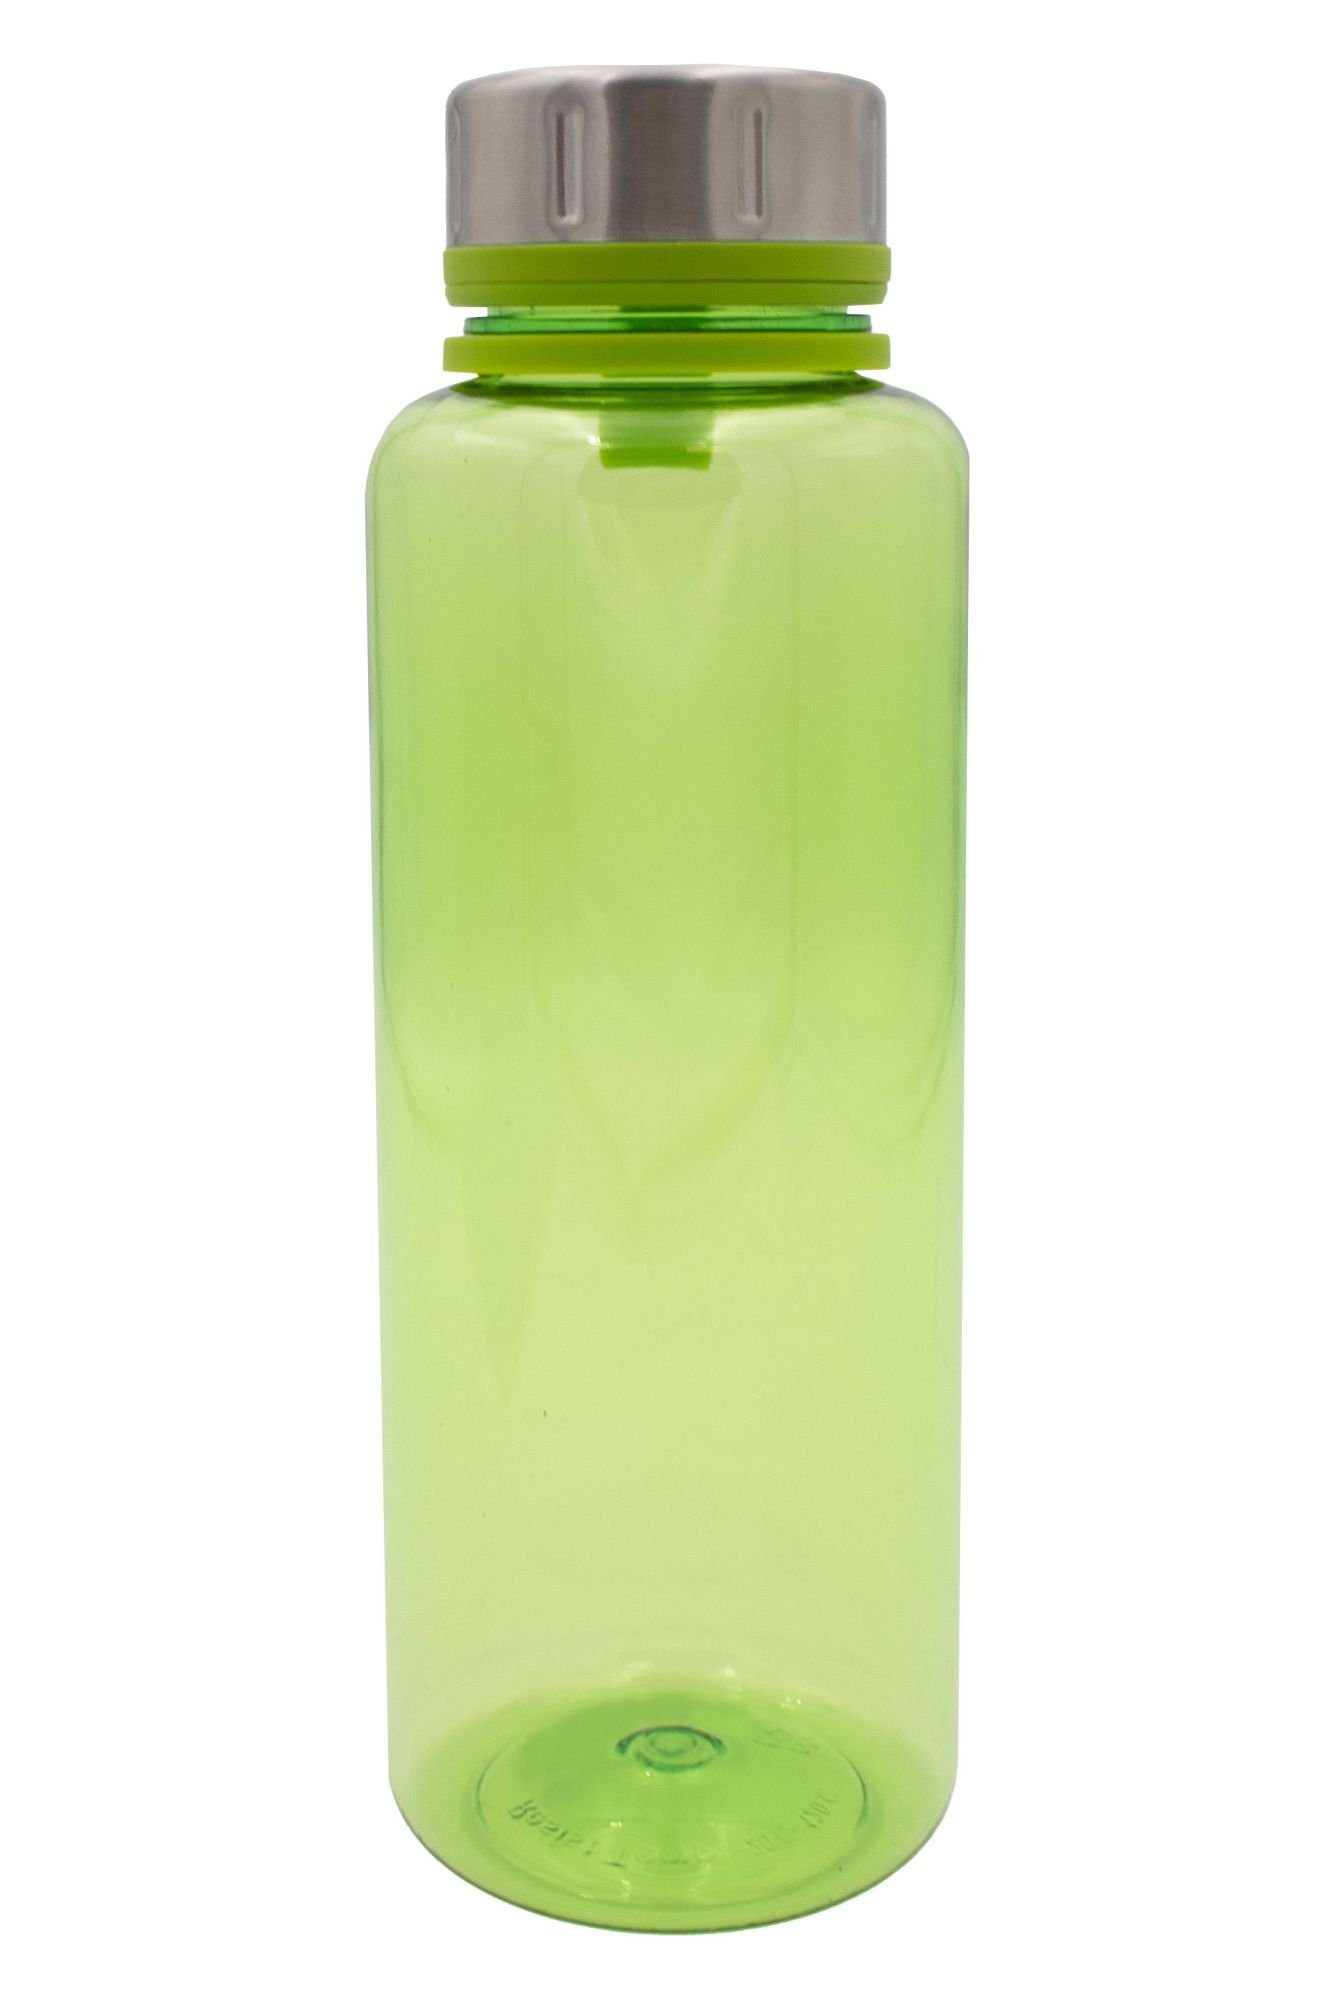 Steuber Trinkflasche Flavour 700ml mintgrün